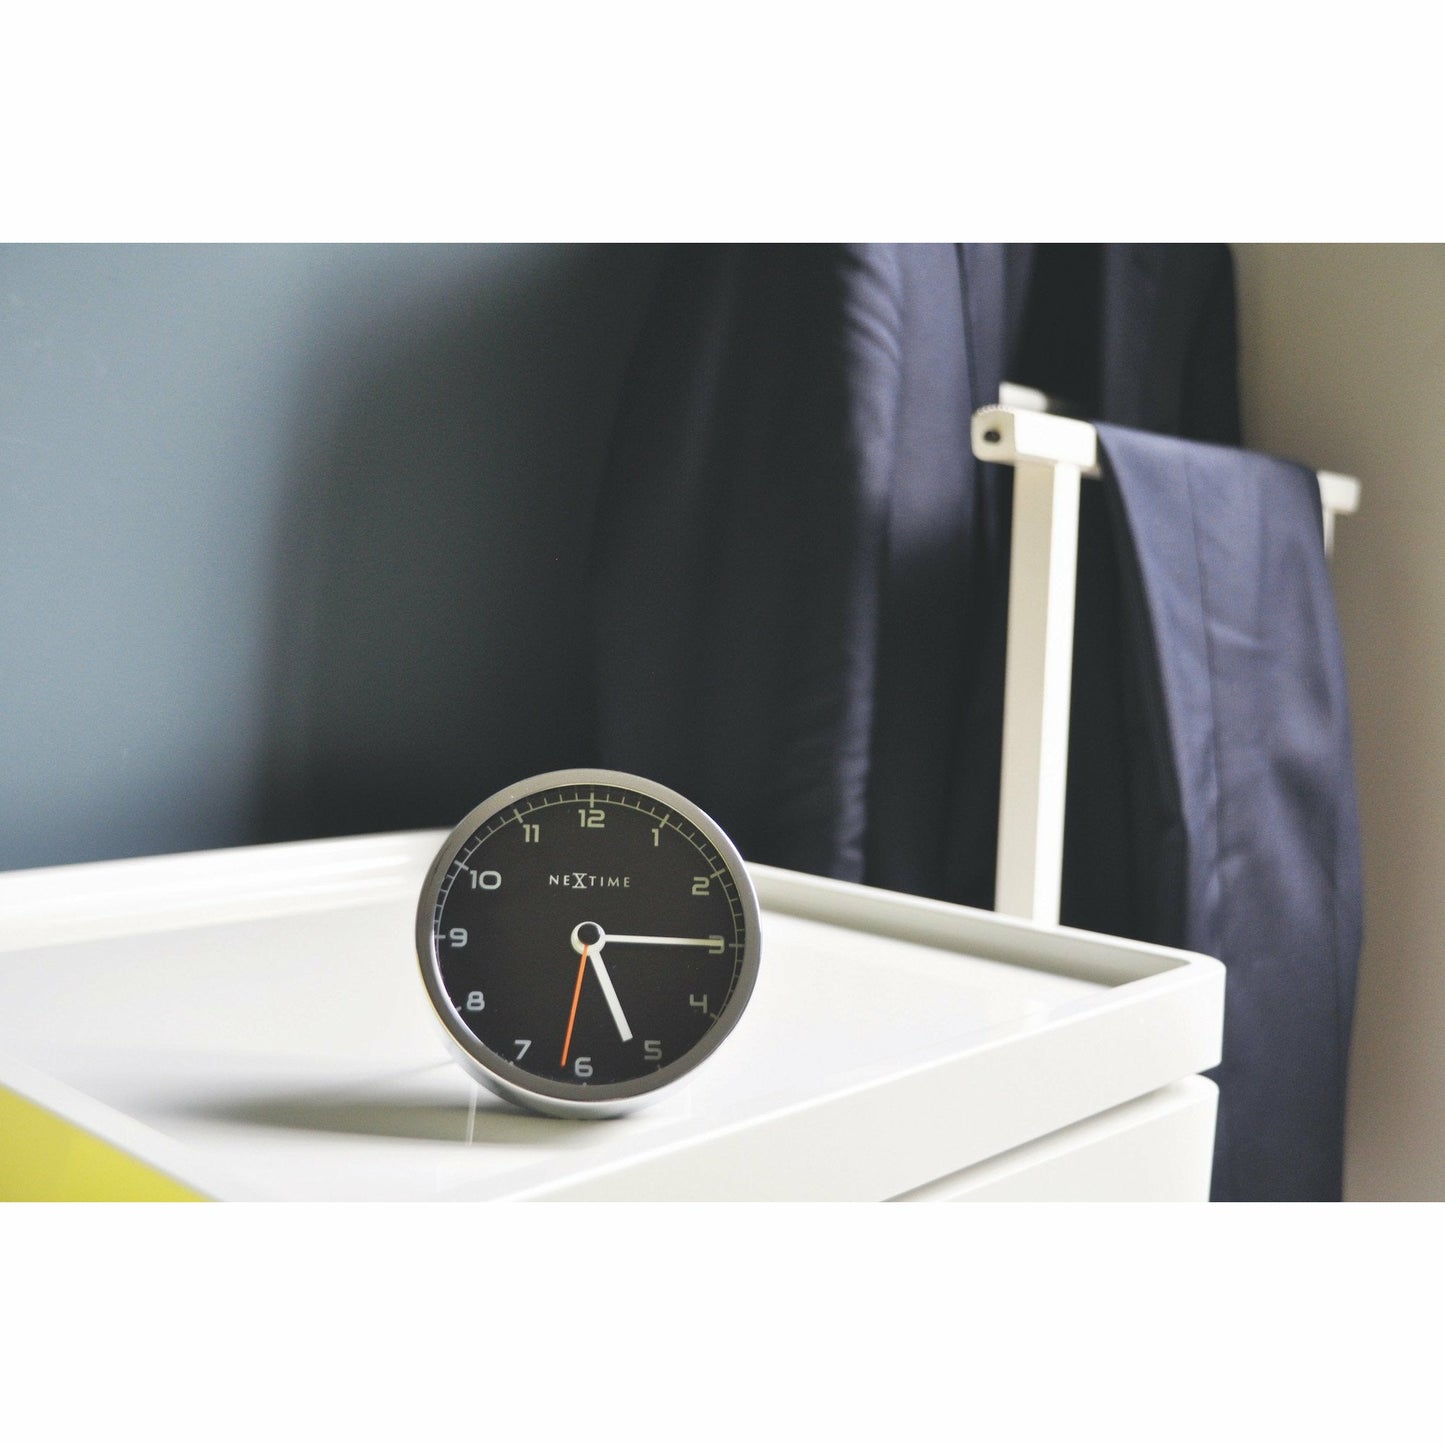 NeXtime - Alarm clock - 9 x 9 x 7.5 cm - Metal - Black - 'Company Alarm'